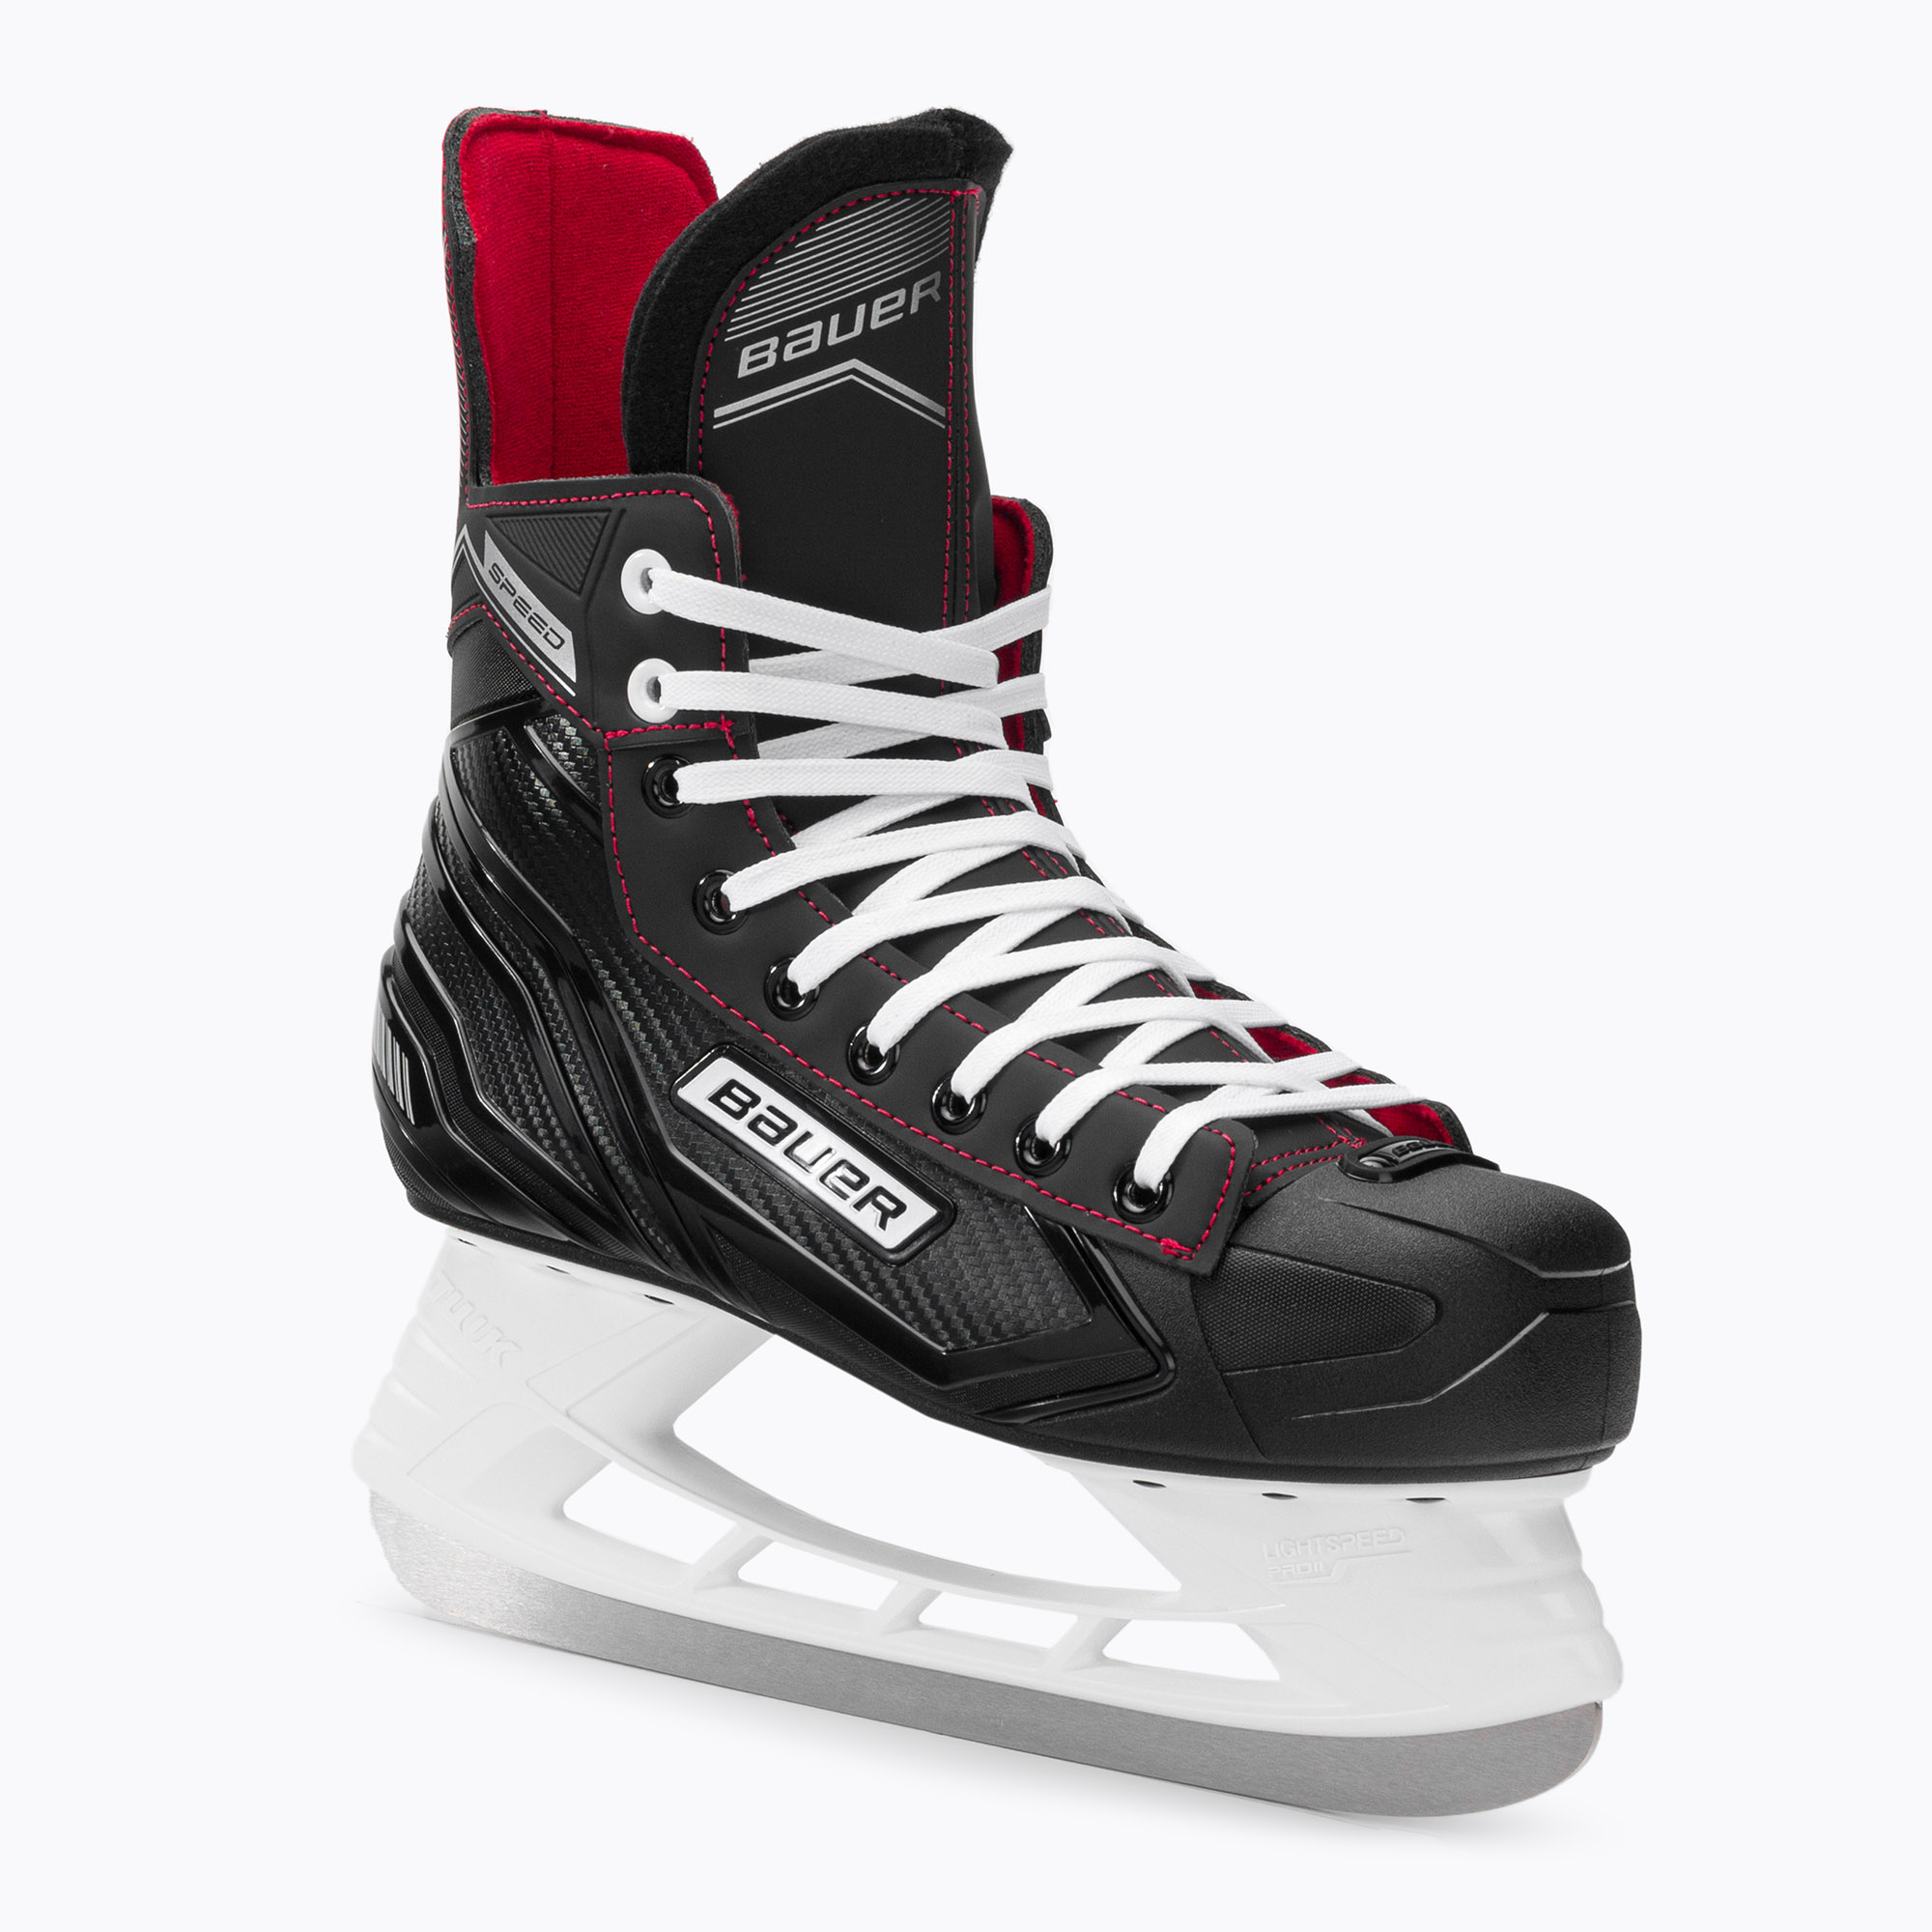 Мъжки кънки за хокей Bauer Speed black 1054542-060R